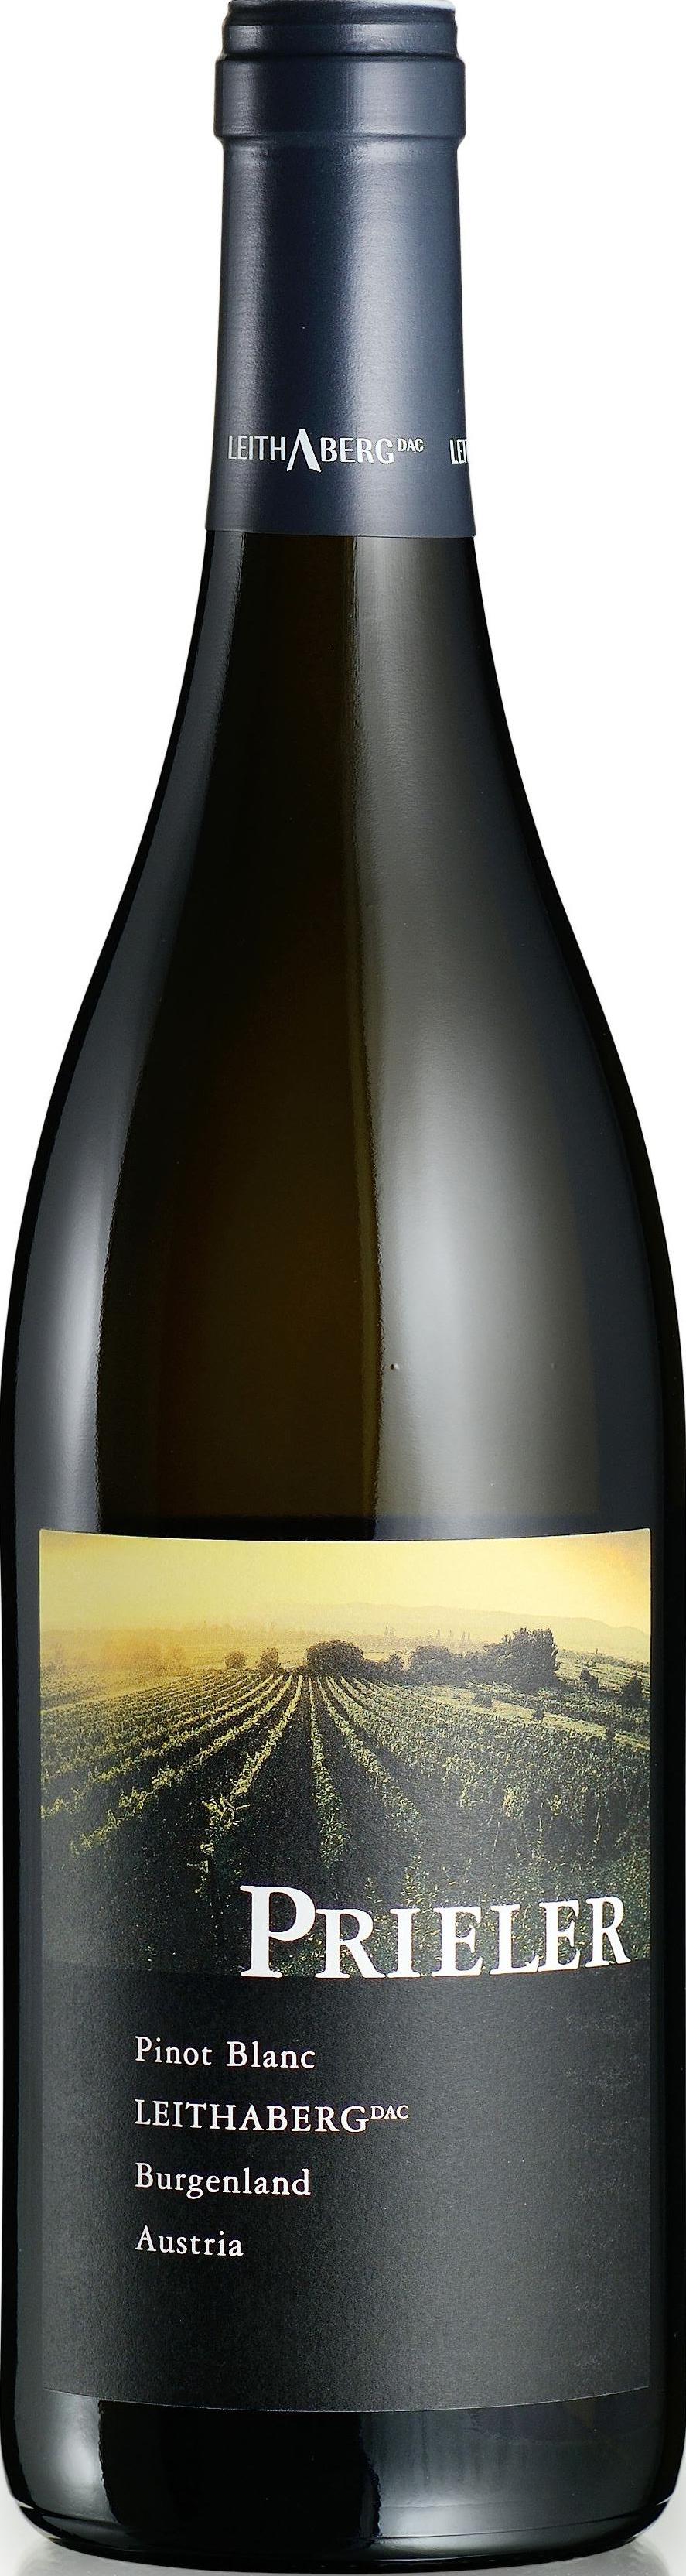 Leithaberg Pinot Blanc, Prieler 2020